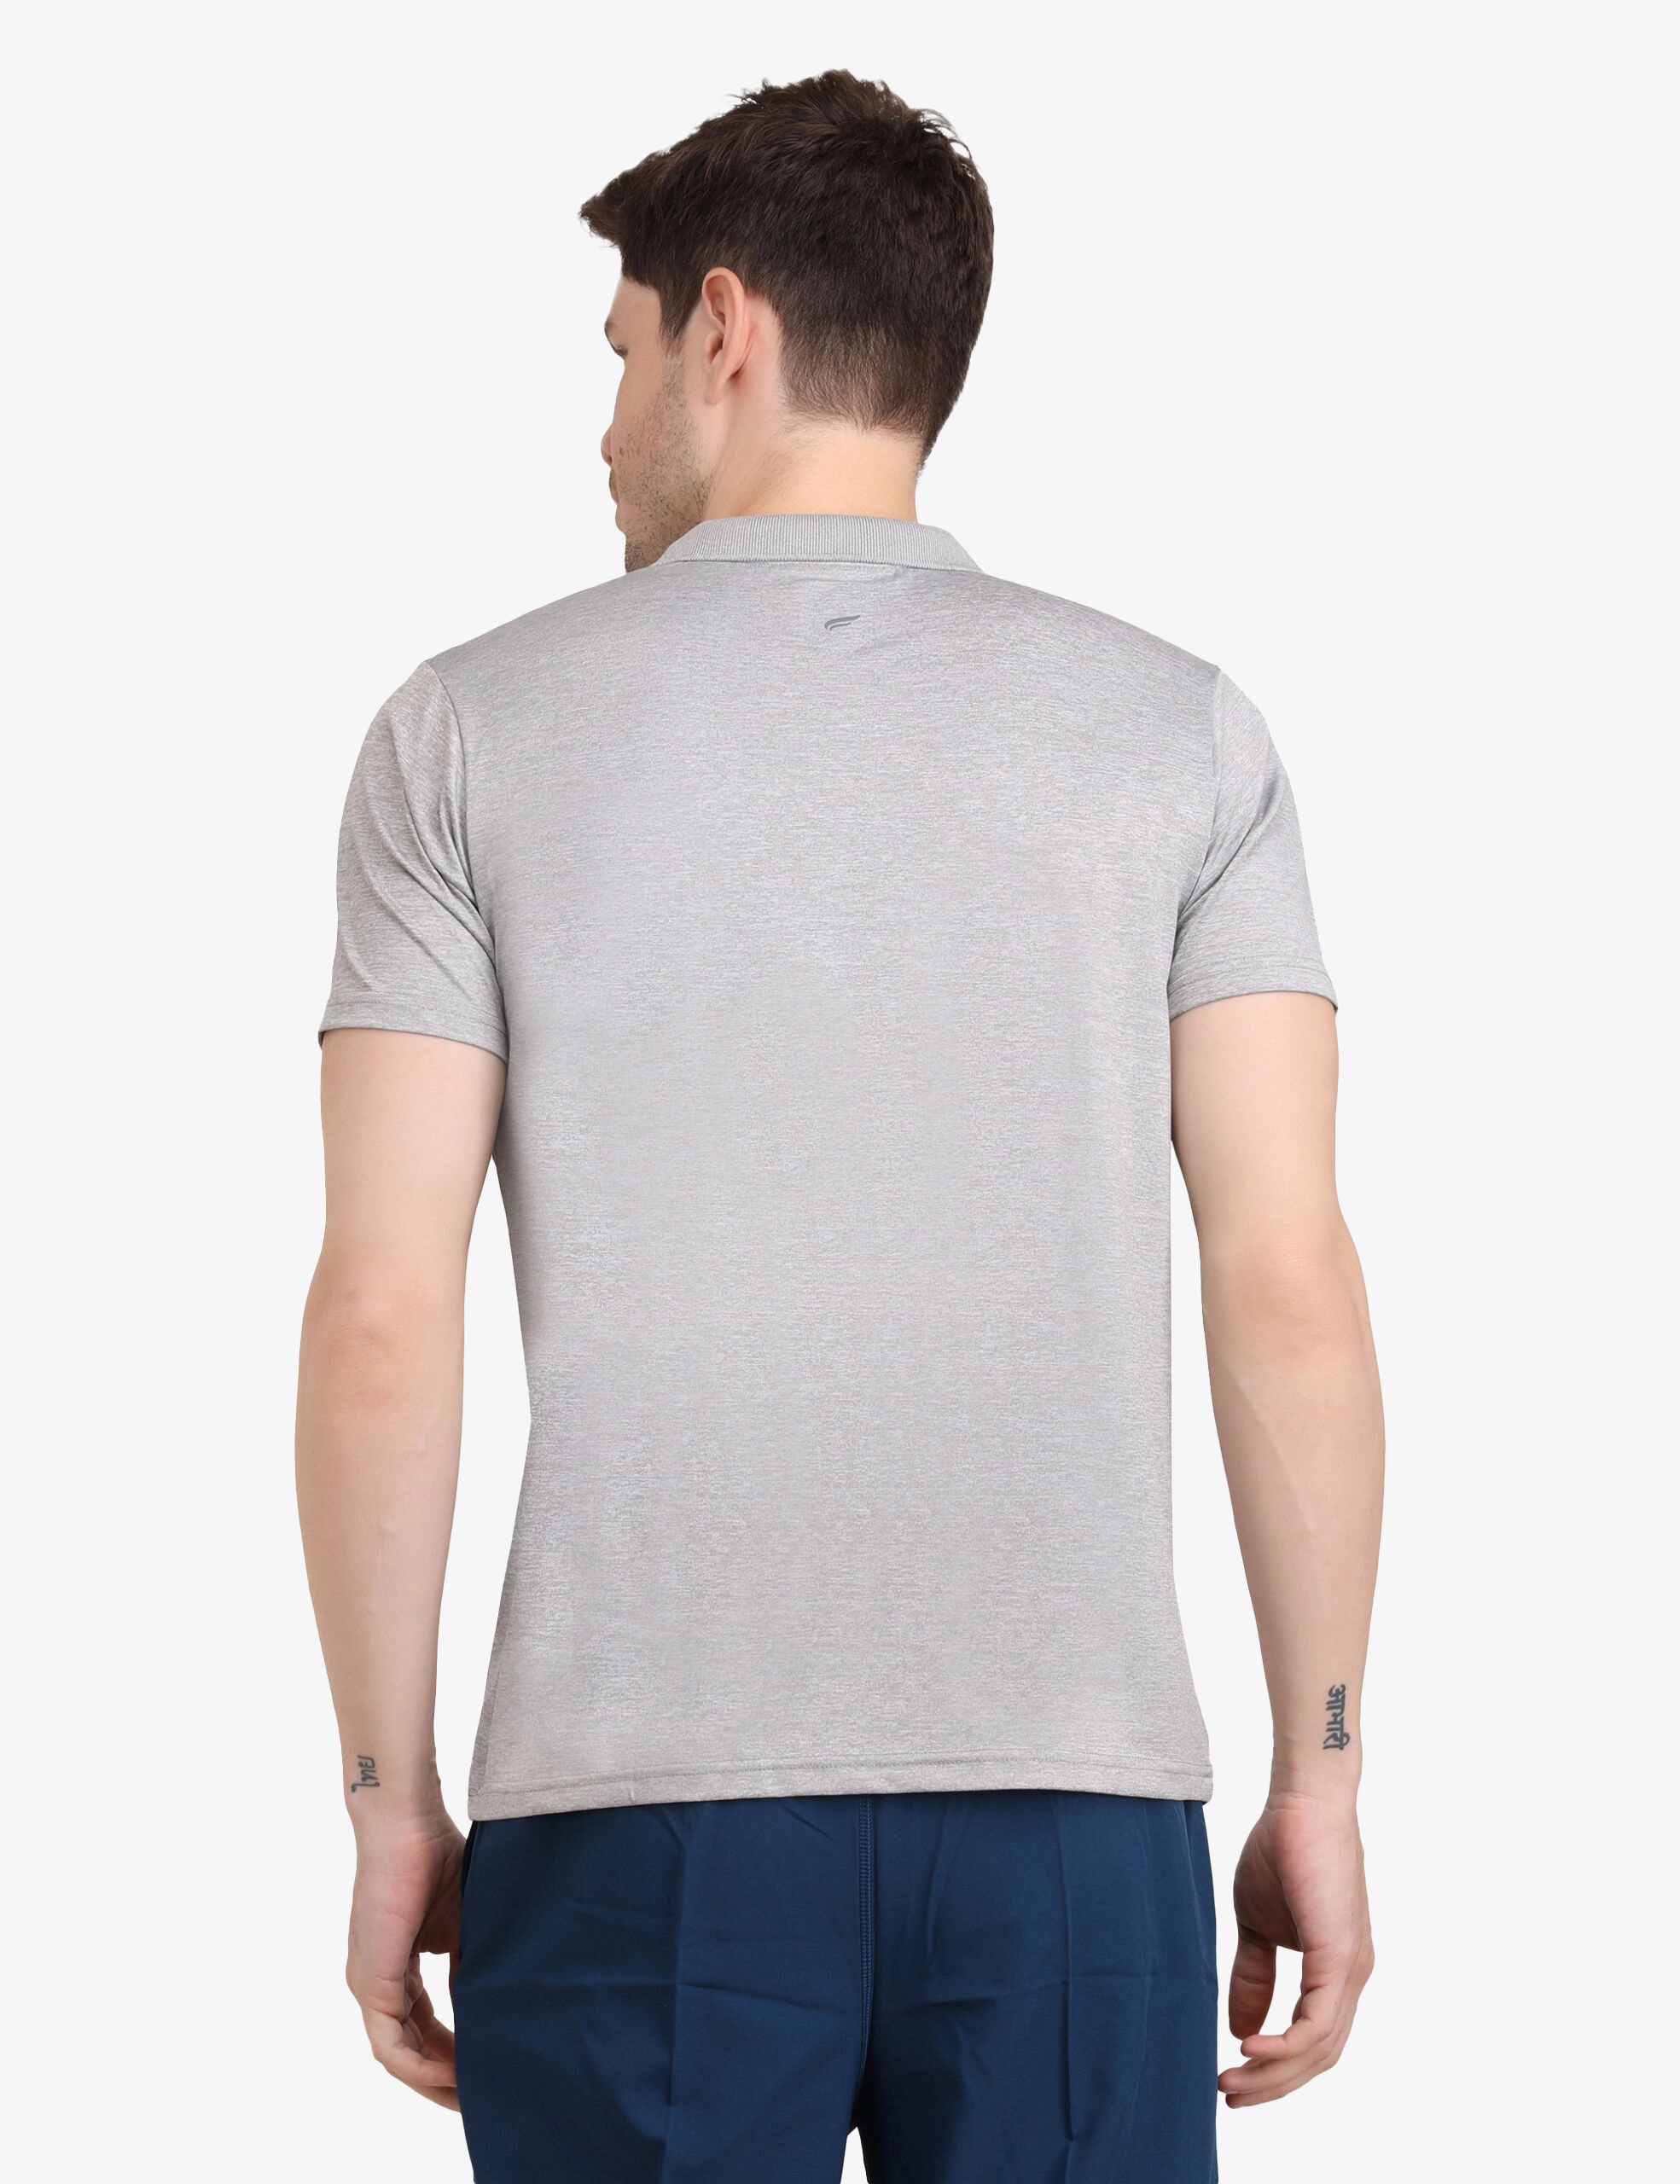 ASI Fest Sports T-Shirt for Men Light Grey Color